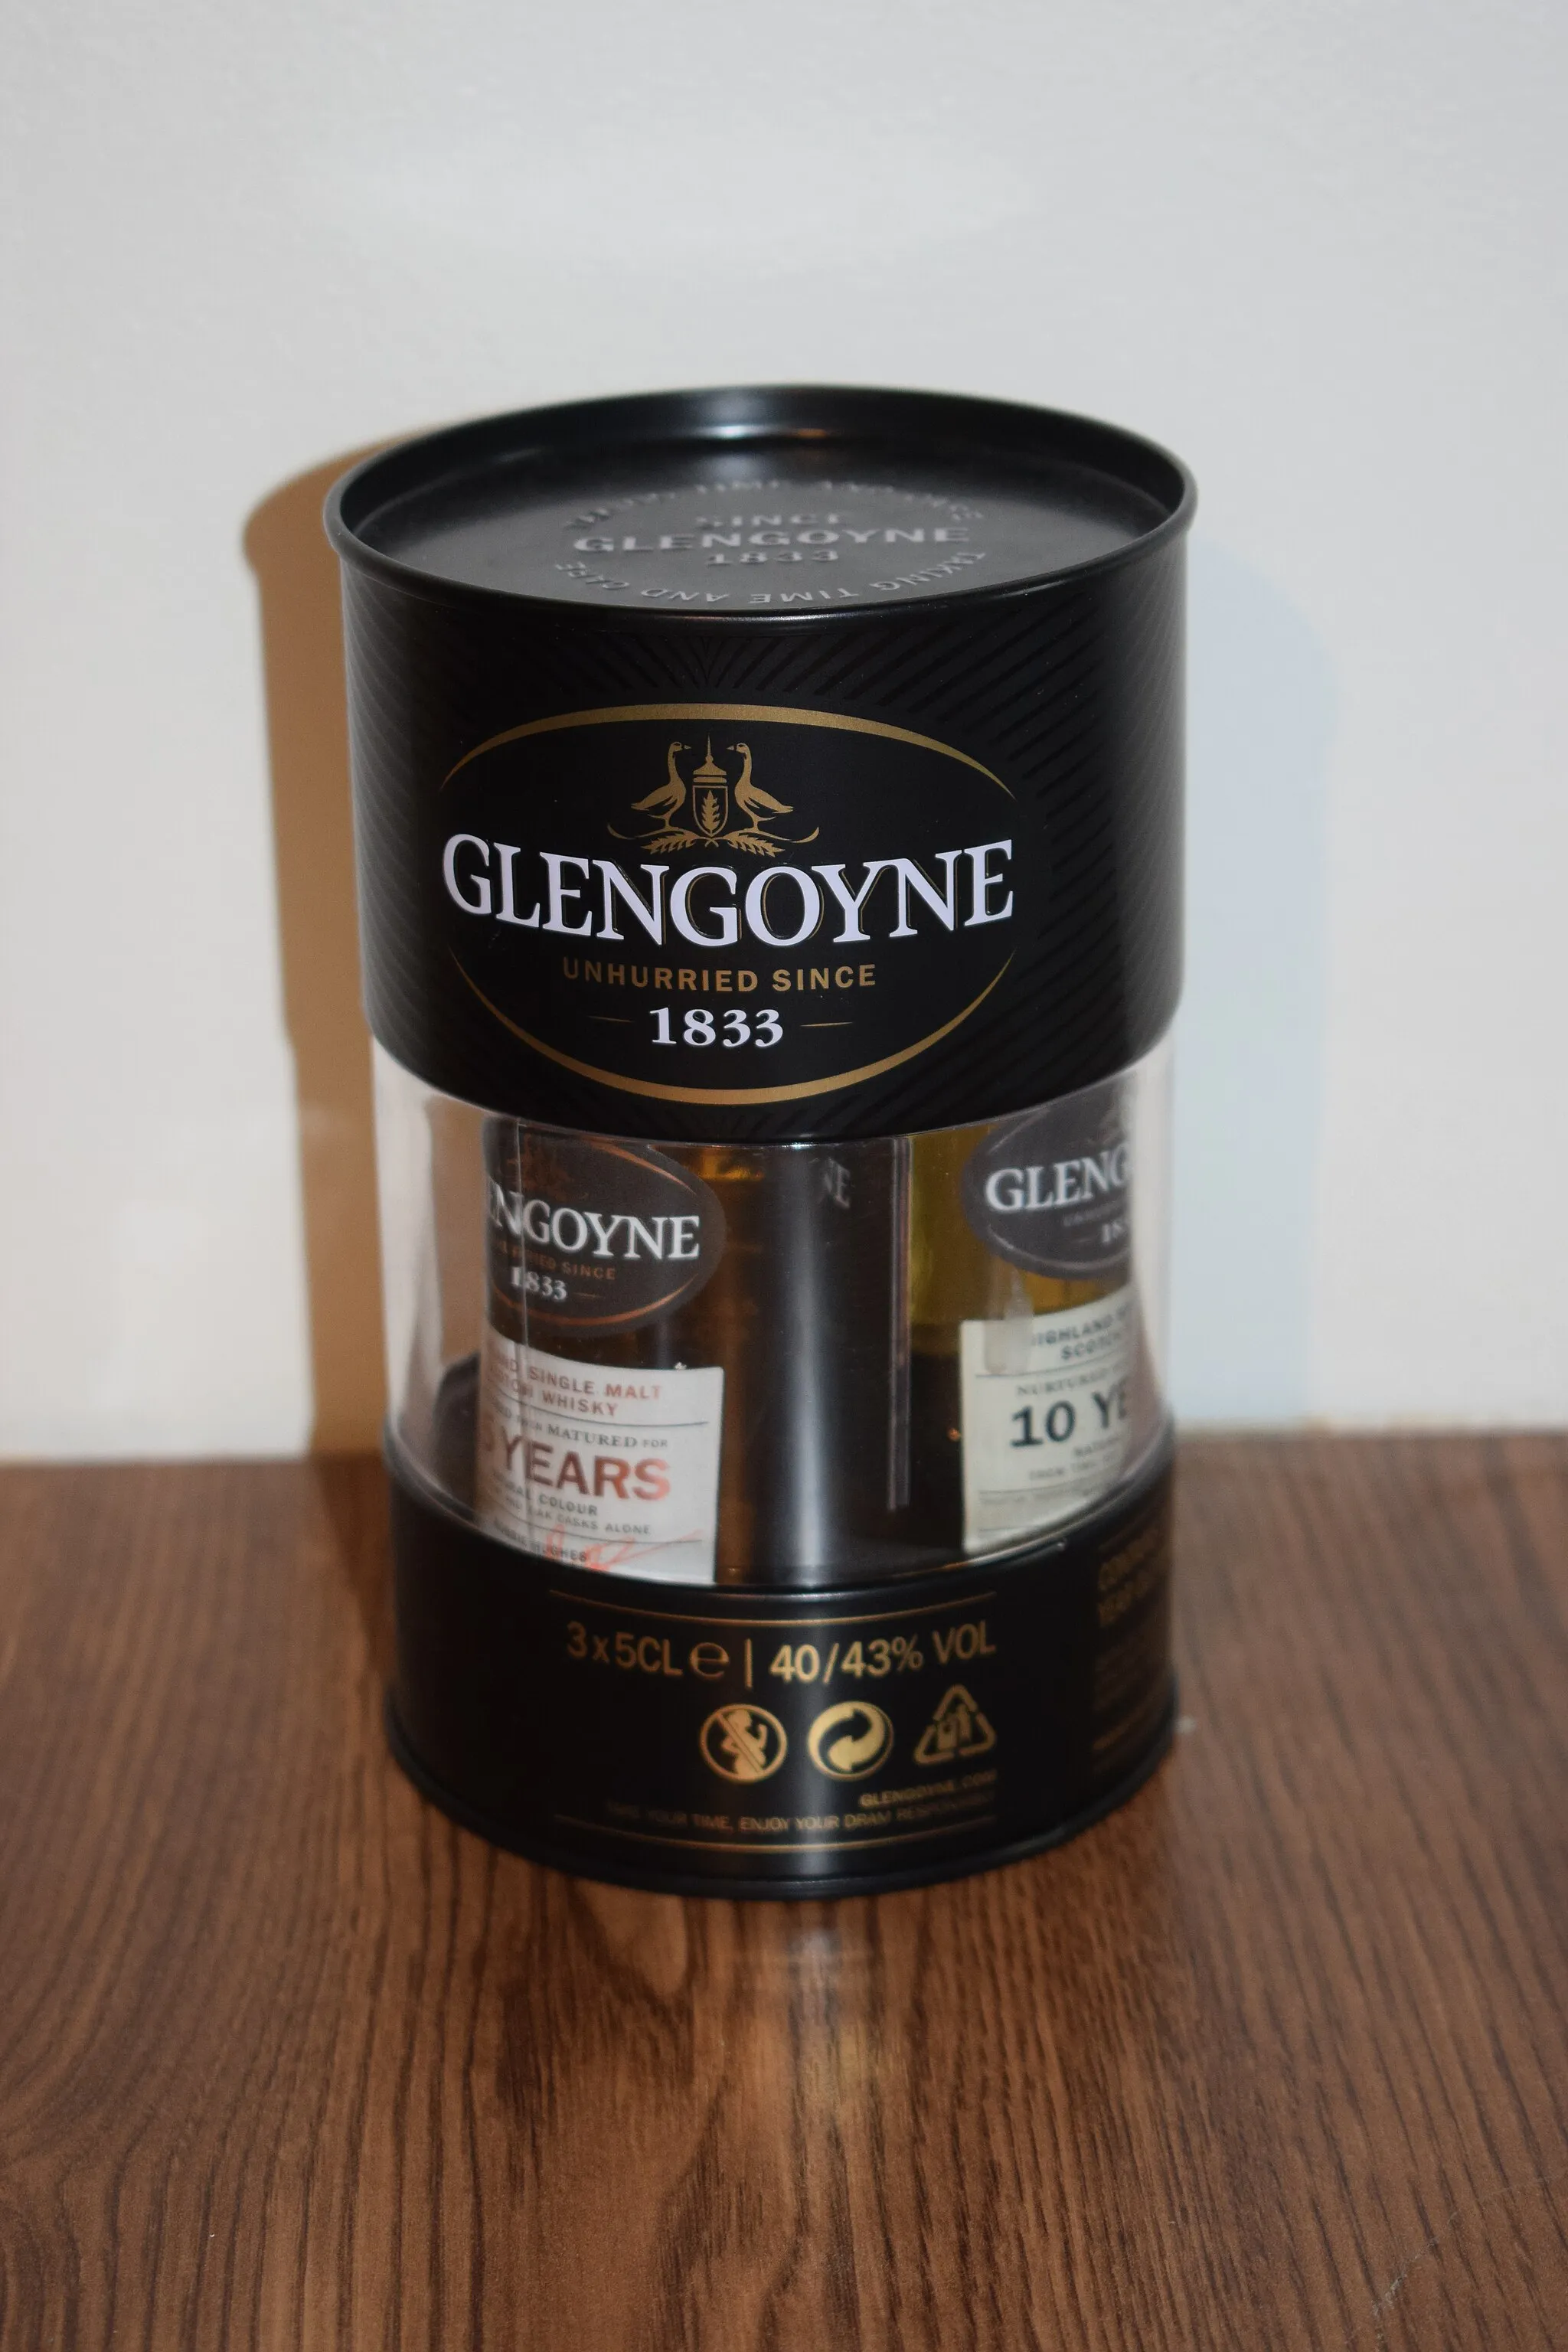 Photo showing: Glengoyne 3x5cl